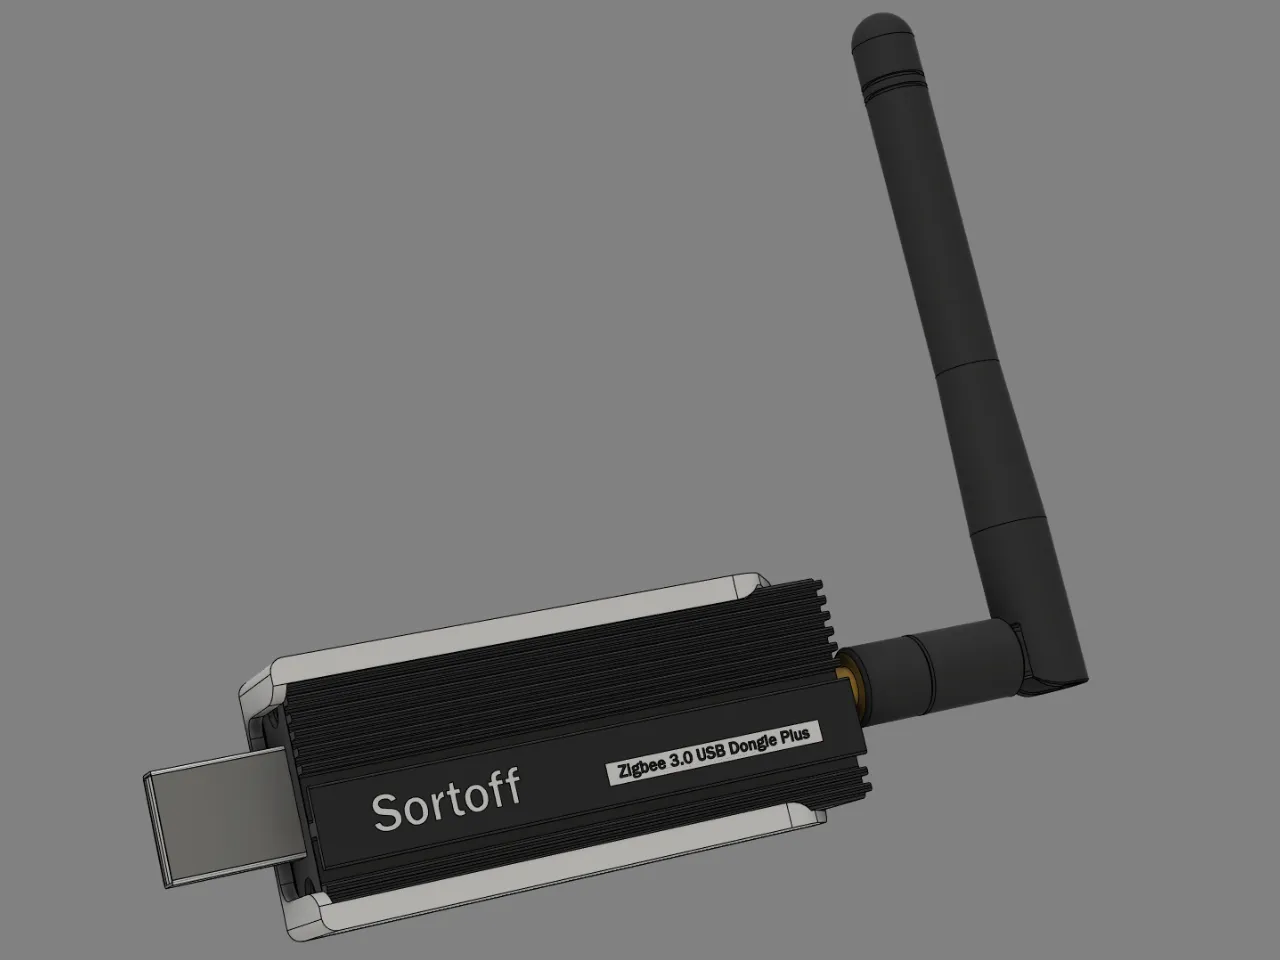 Sonoff Zigbee 3.0 USB Dongle Plus P\E Wall Mounts by Volan